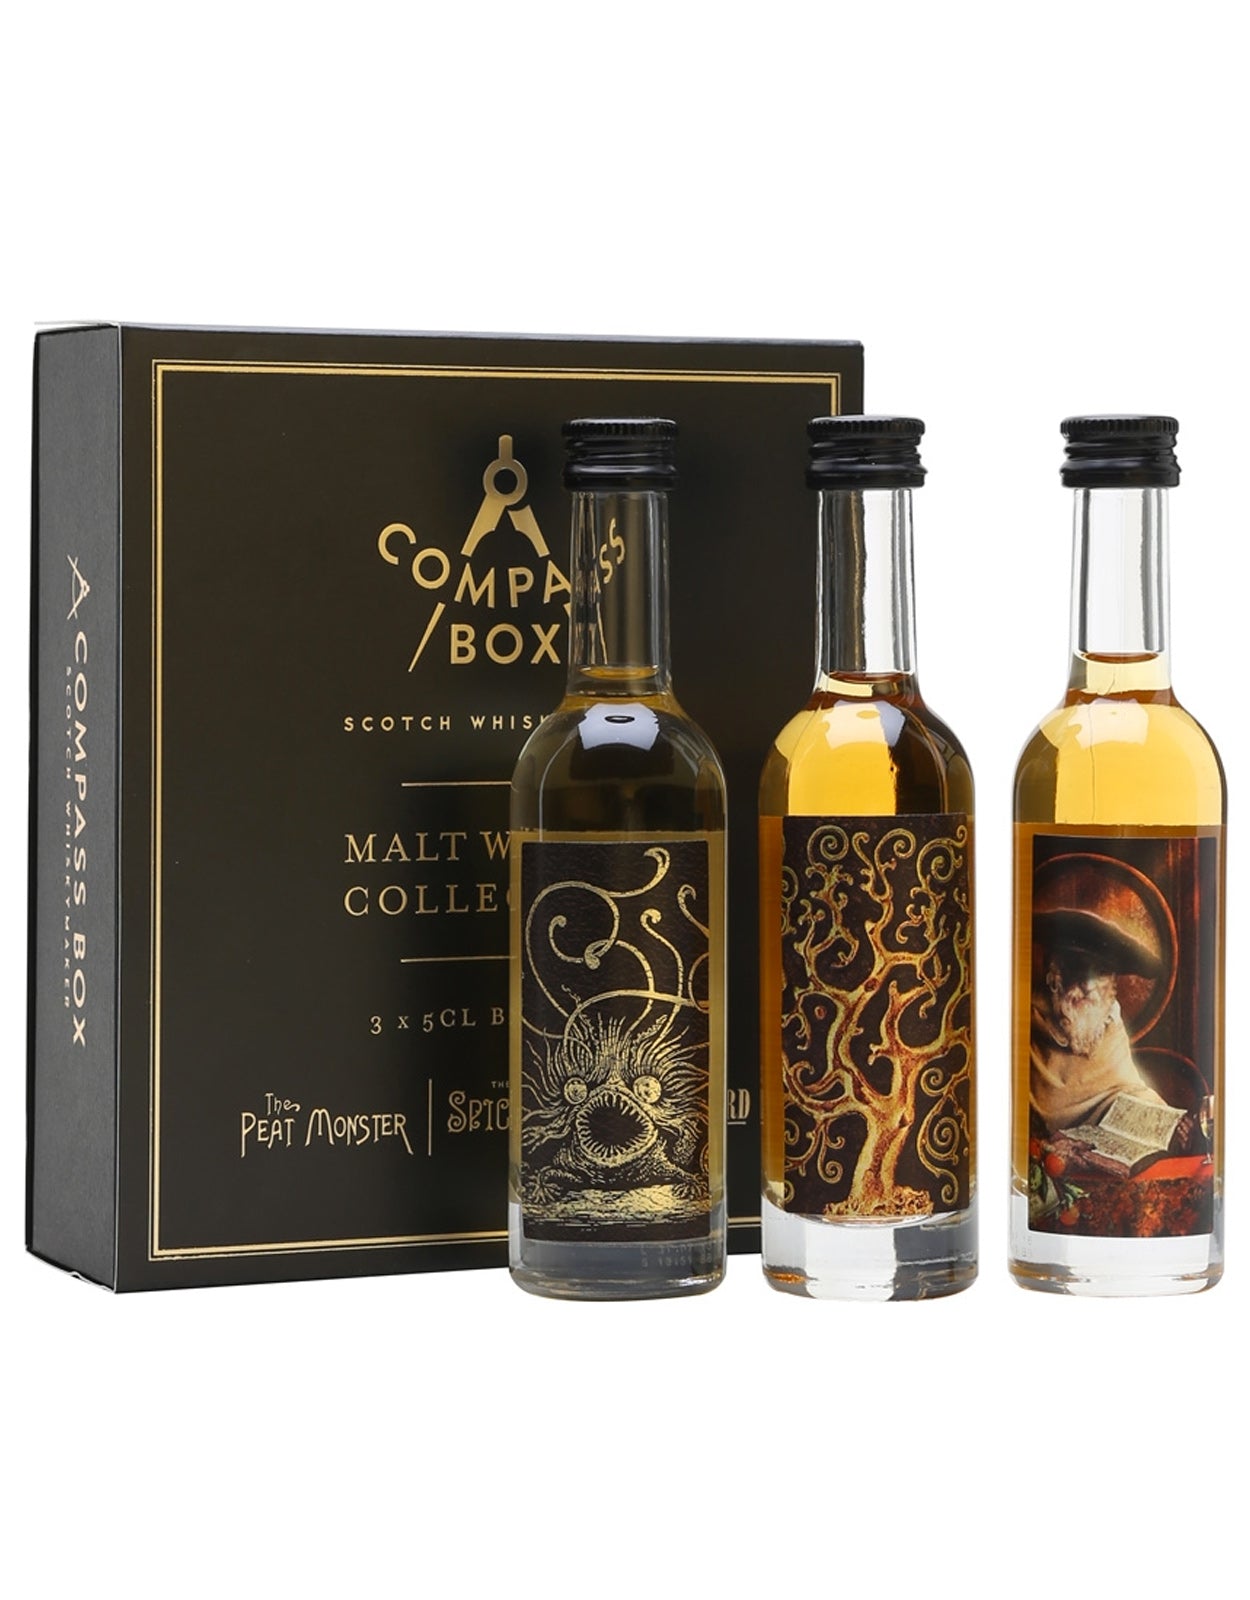 Compass Box Malt Whisky Collection - 3 x 50 ml Bottles